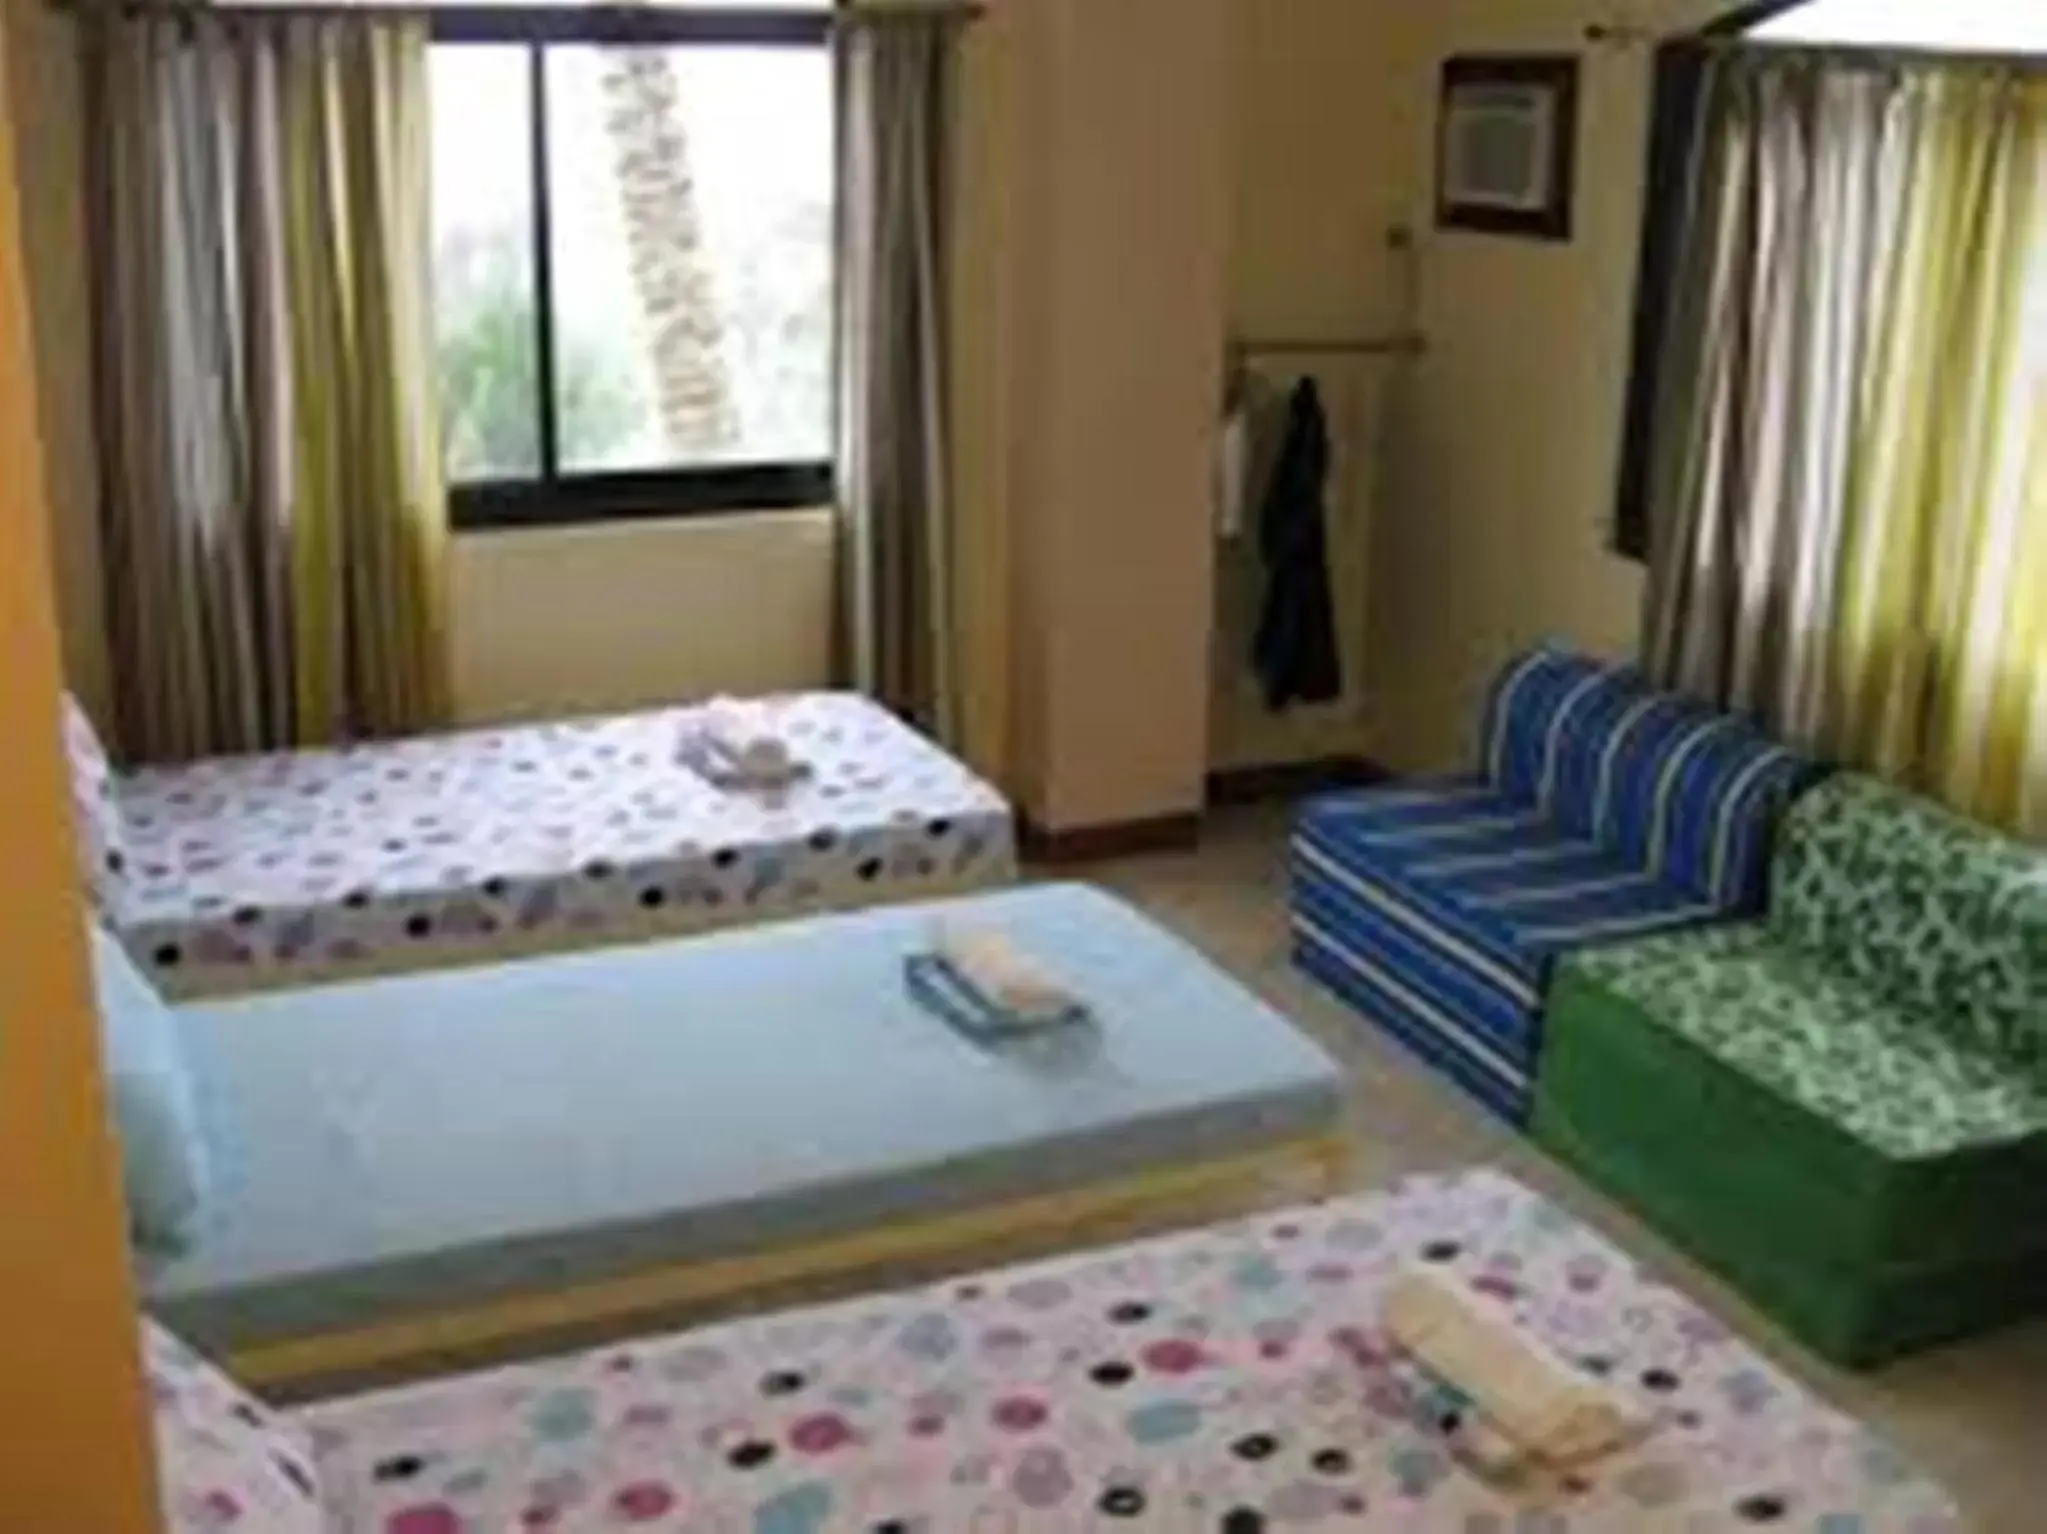 Bed, Room Photo in Divine Castle Travelers Inn